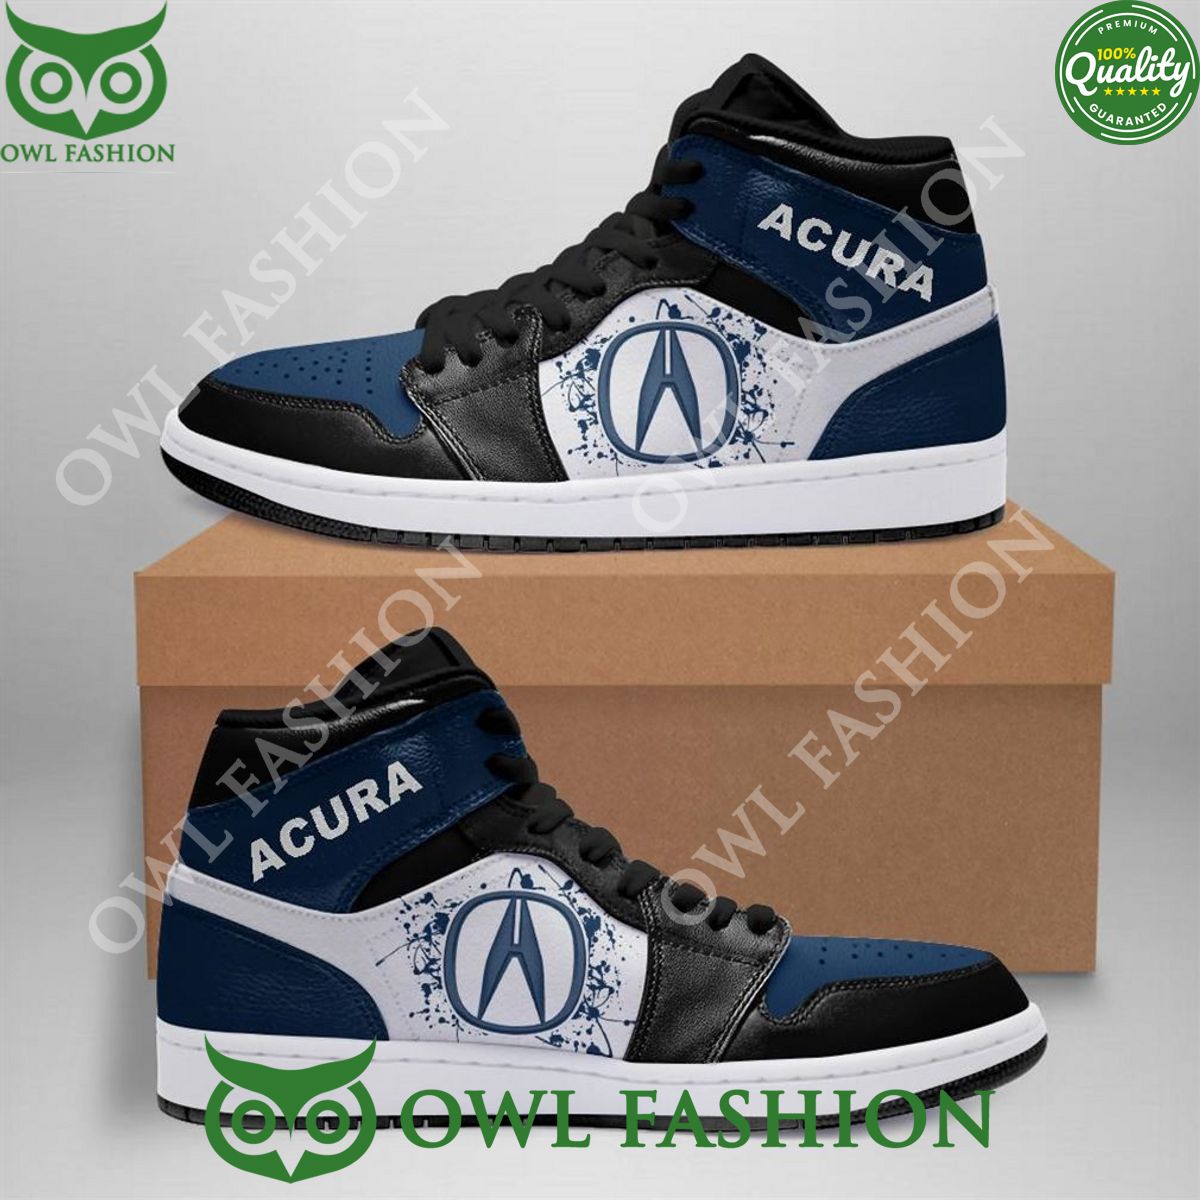 Acura Automobile Car Brand Air Jordan Sneaker Boots Shoes Sport